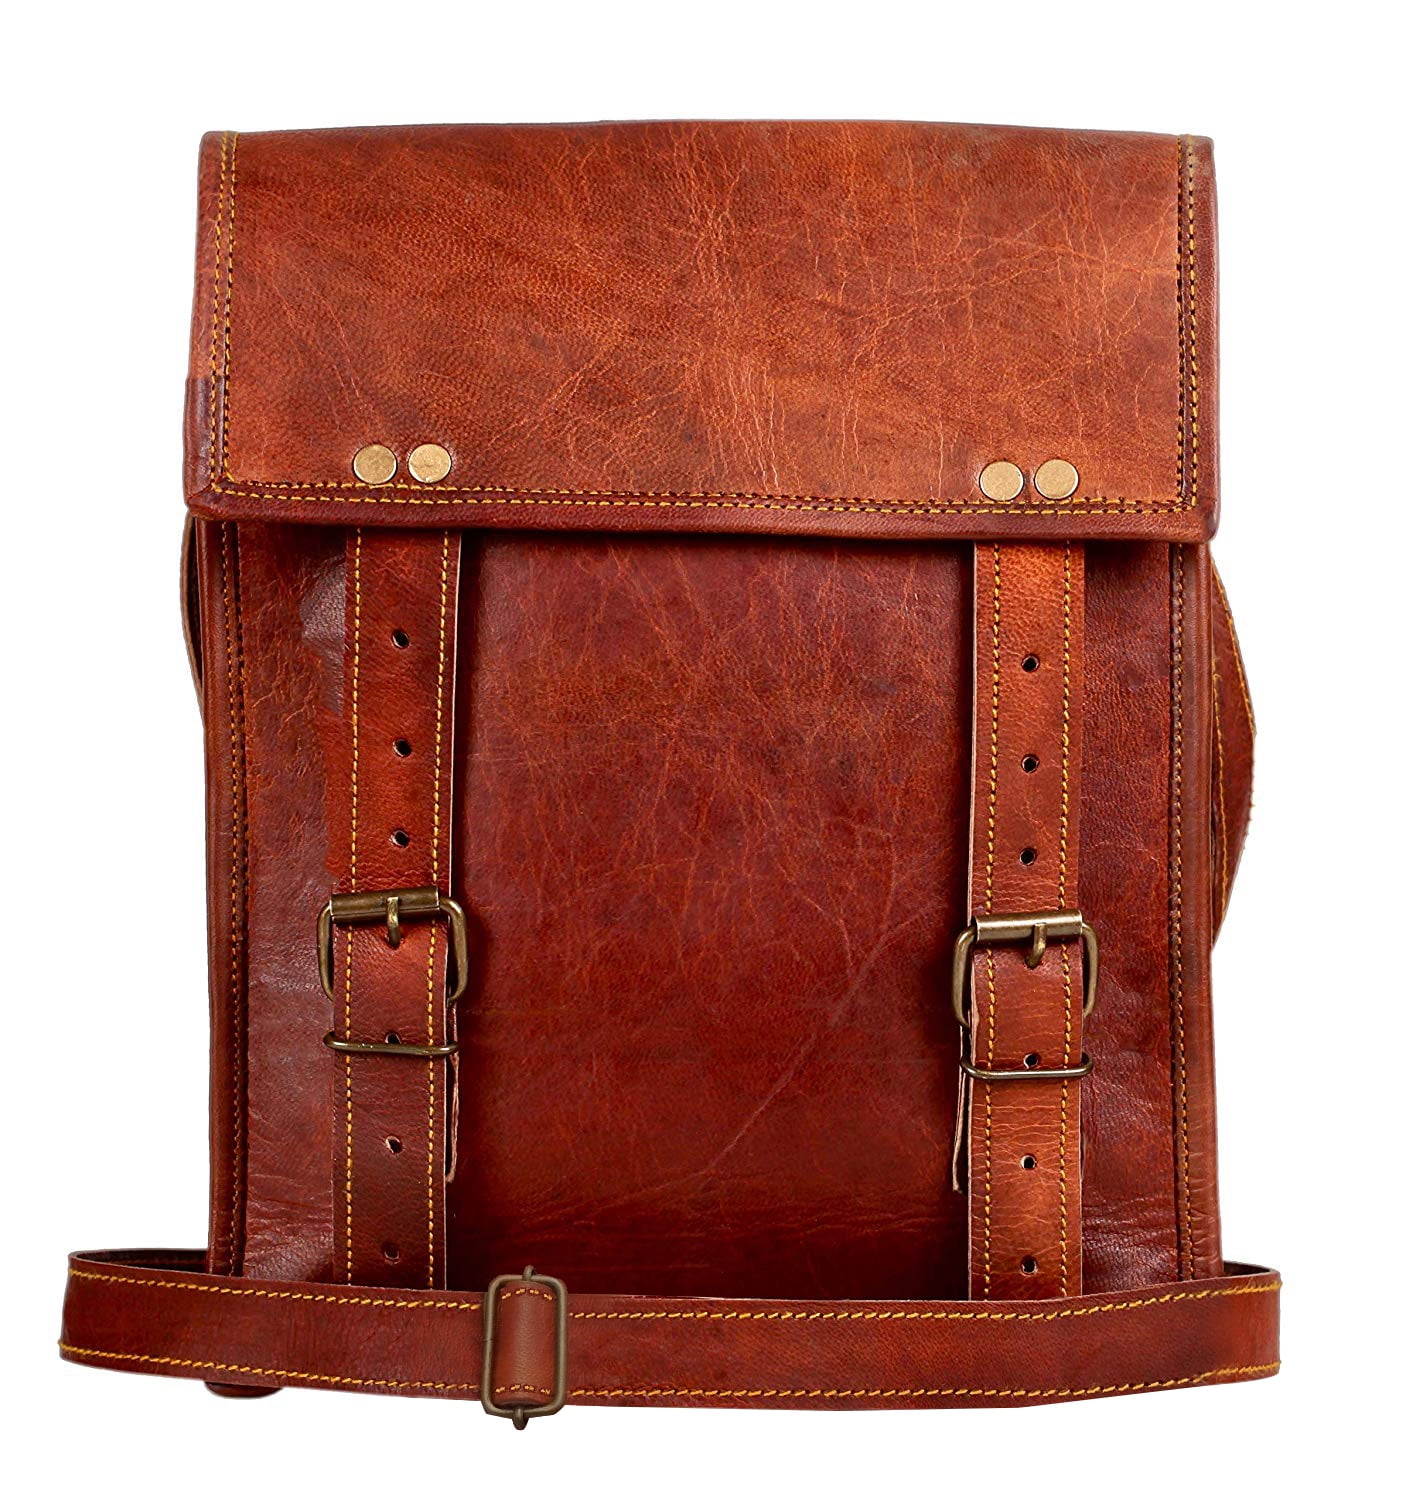 Mens REAL Leather Shoulder Bag TAN Vintage Messenger Casual TOP QUALITY iPad BAG 